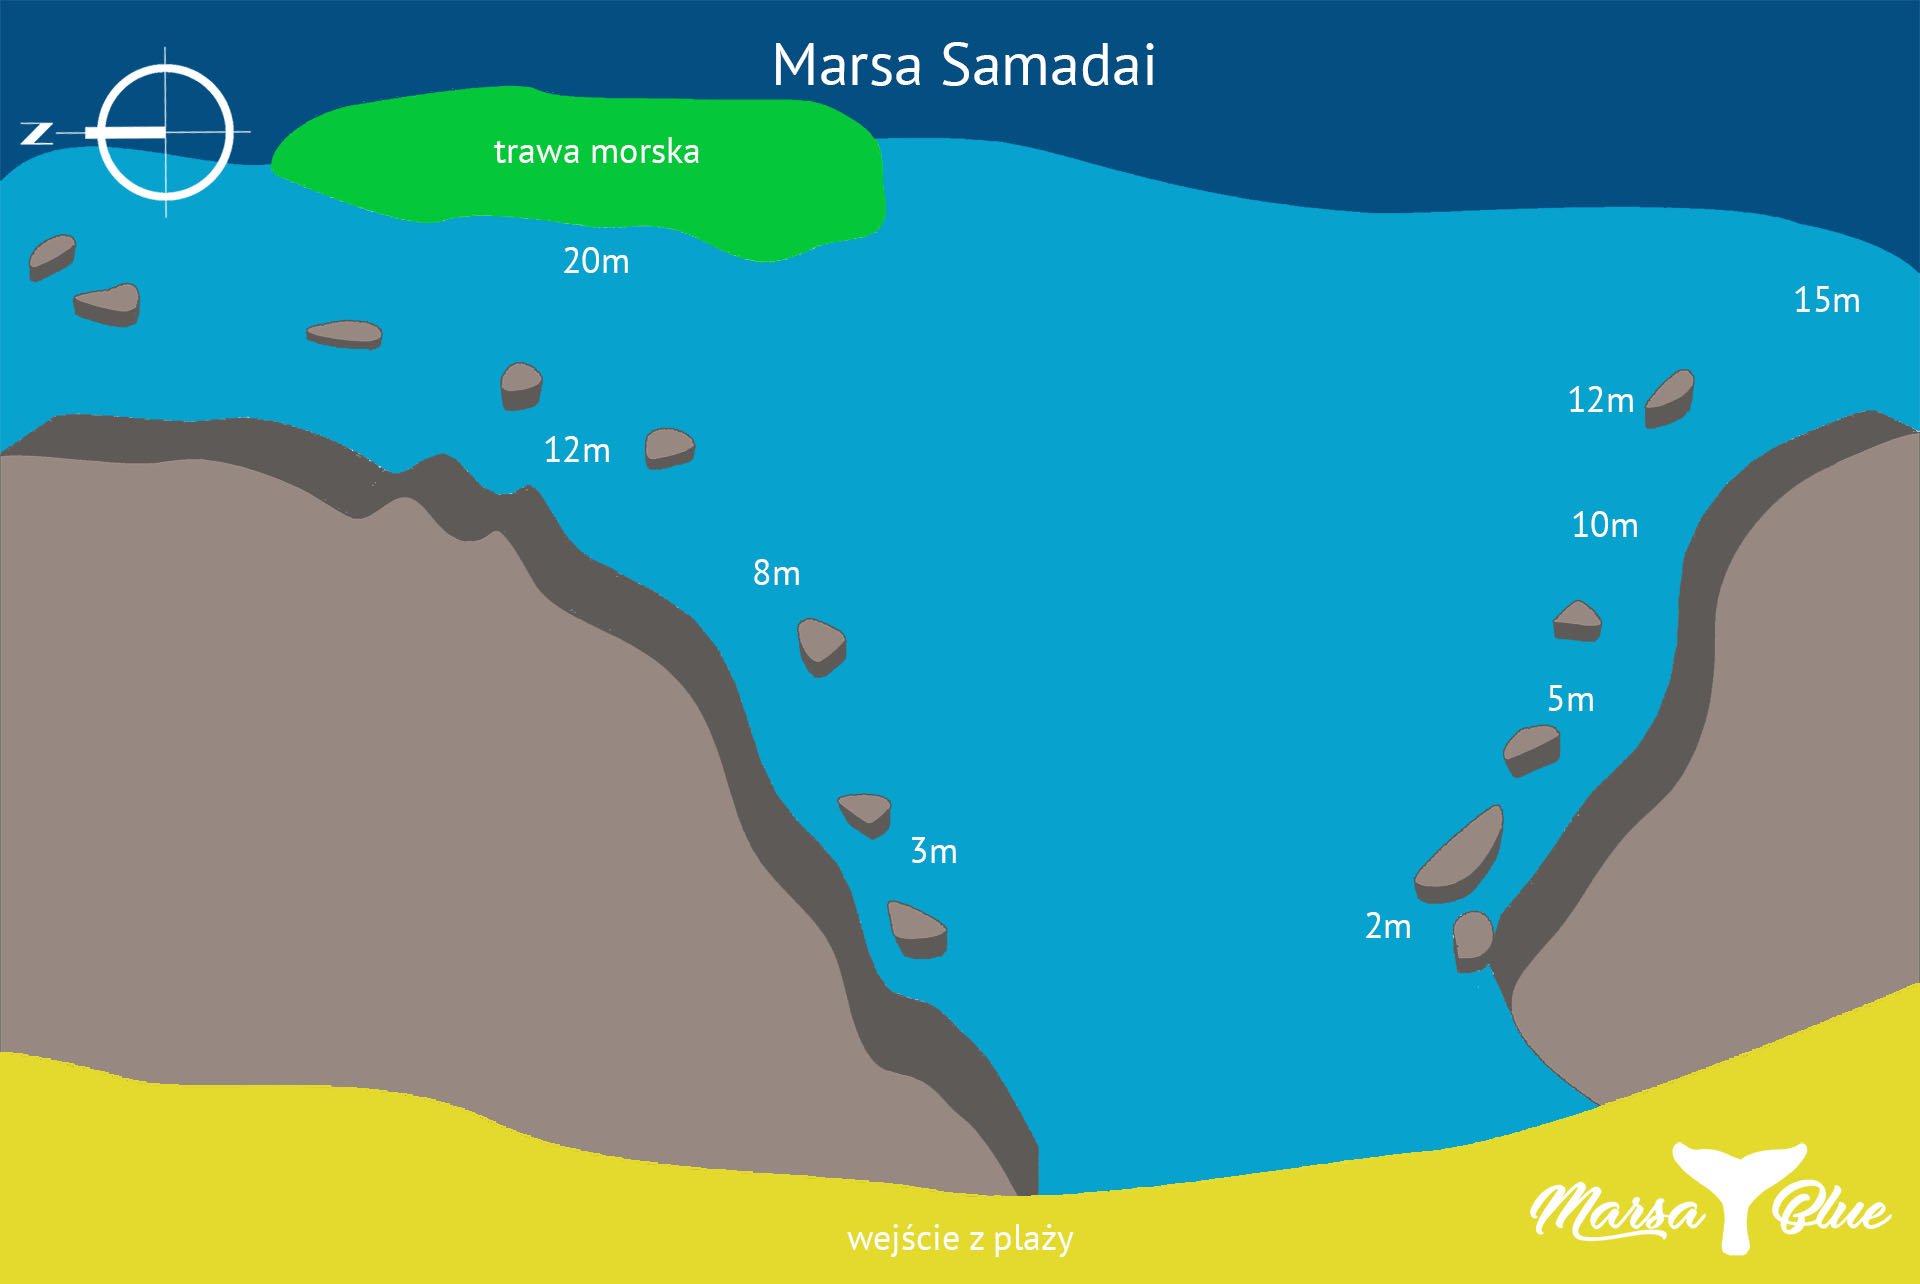 Marsa Samadai - Mapa spotu nurkowego